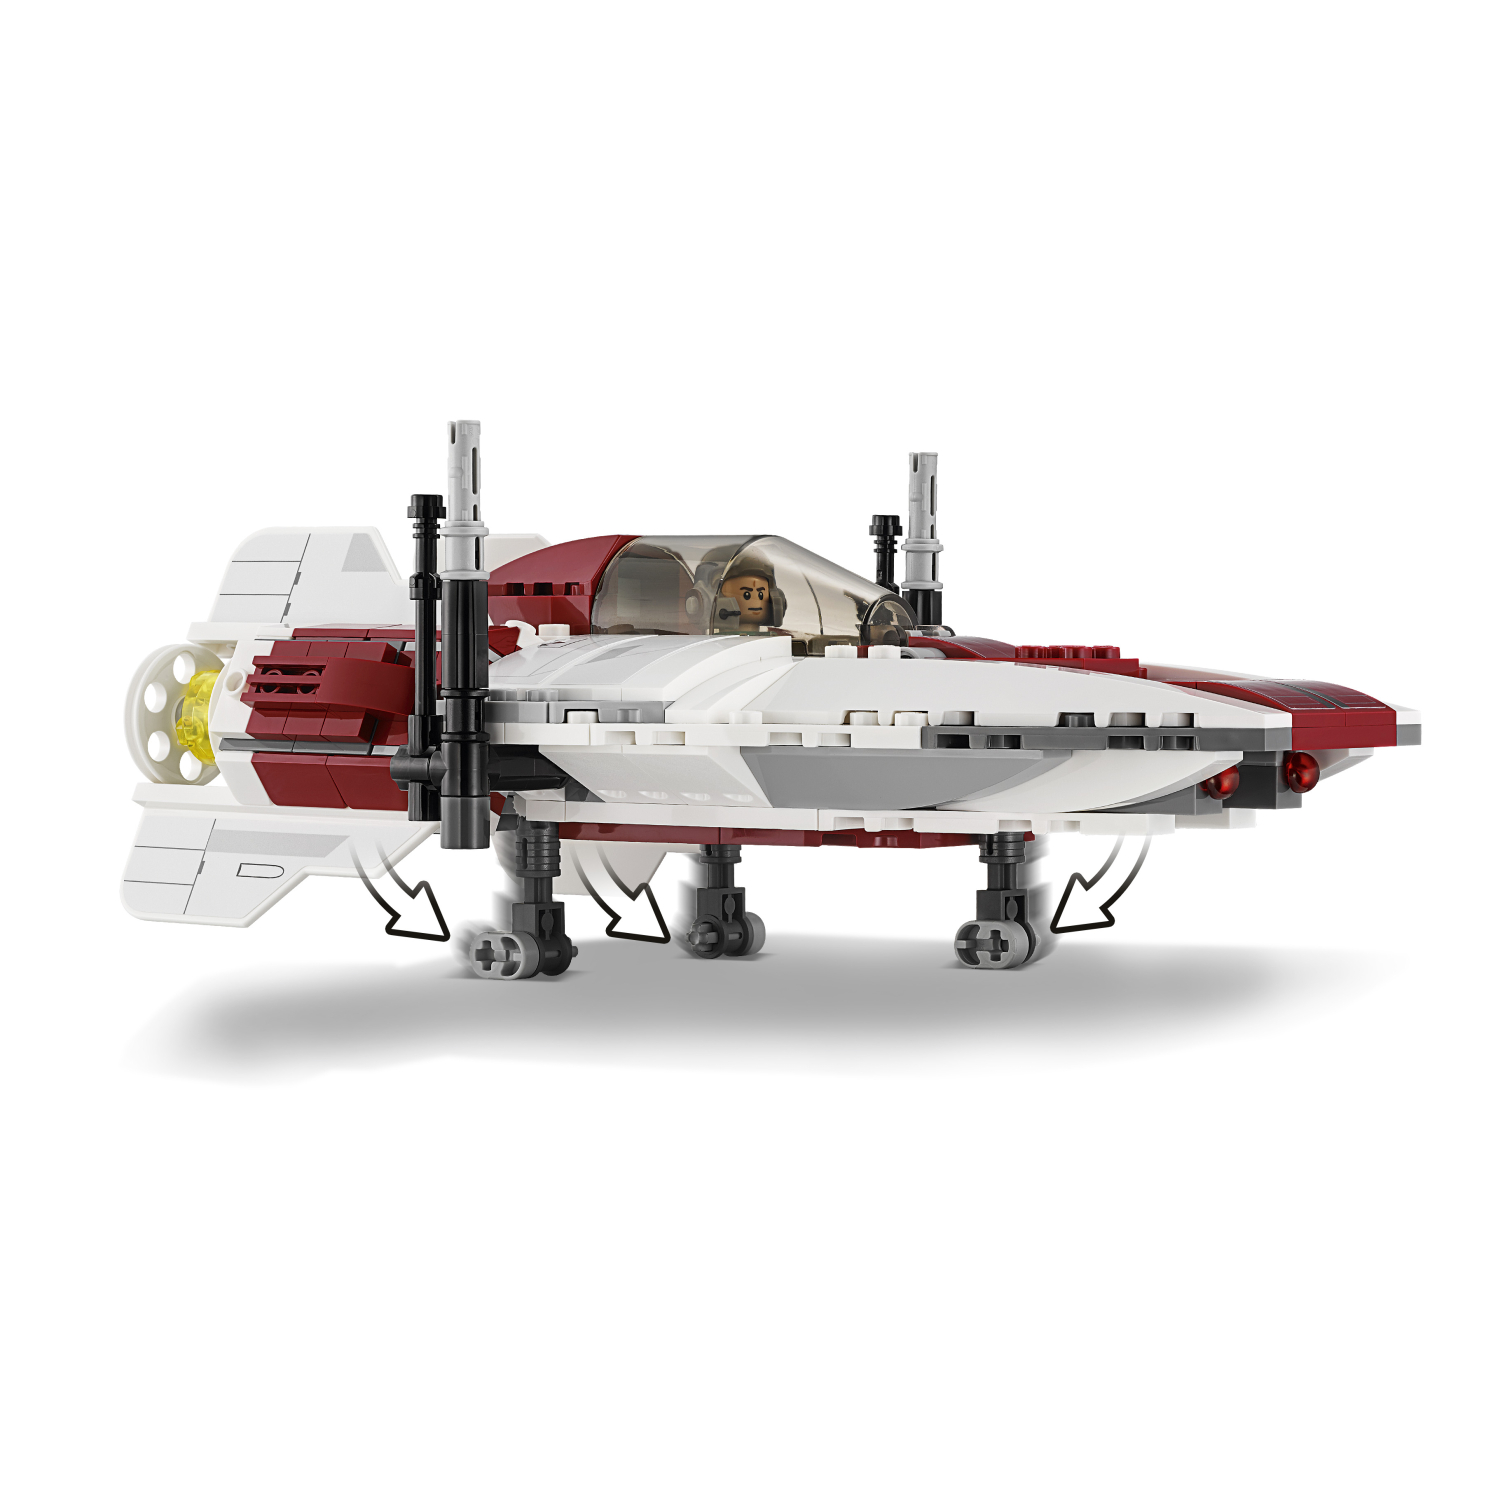 75175 Star Wars TM A-Wing Starfighter™